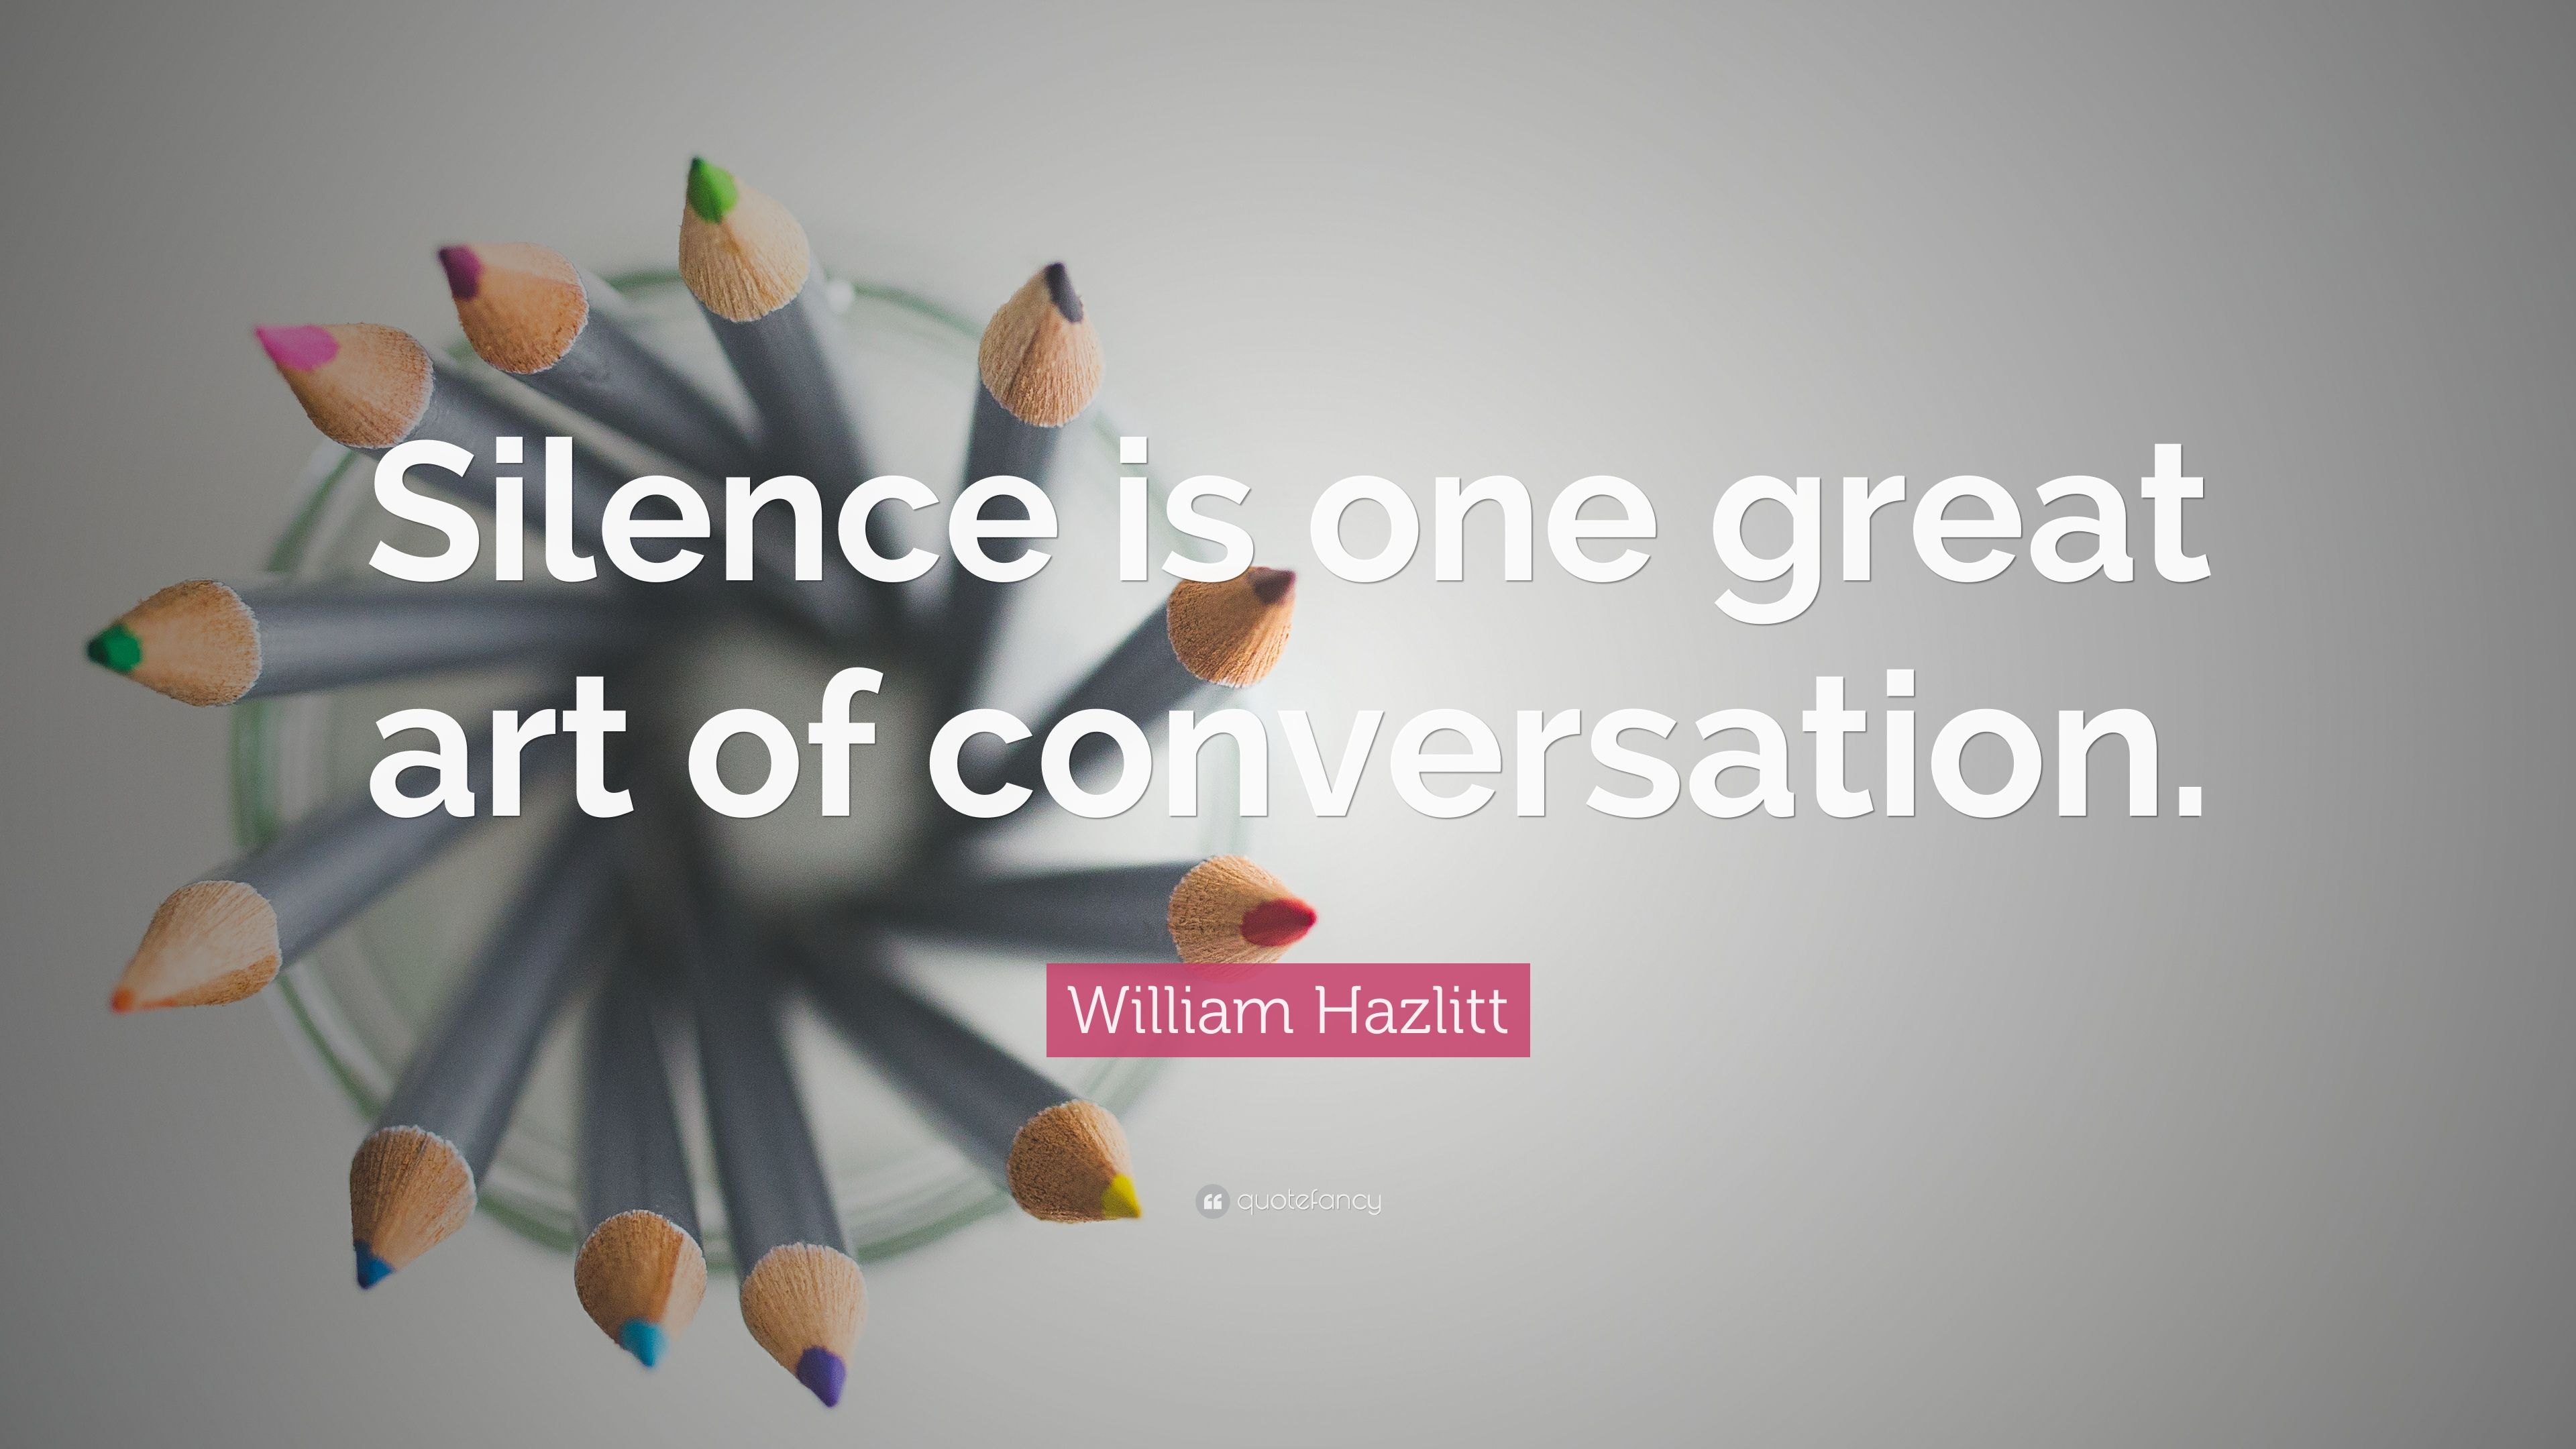 William Hazlitt Quote: “Silence is one great art of conversation